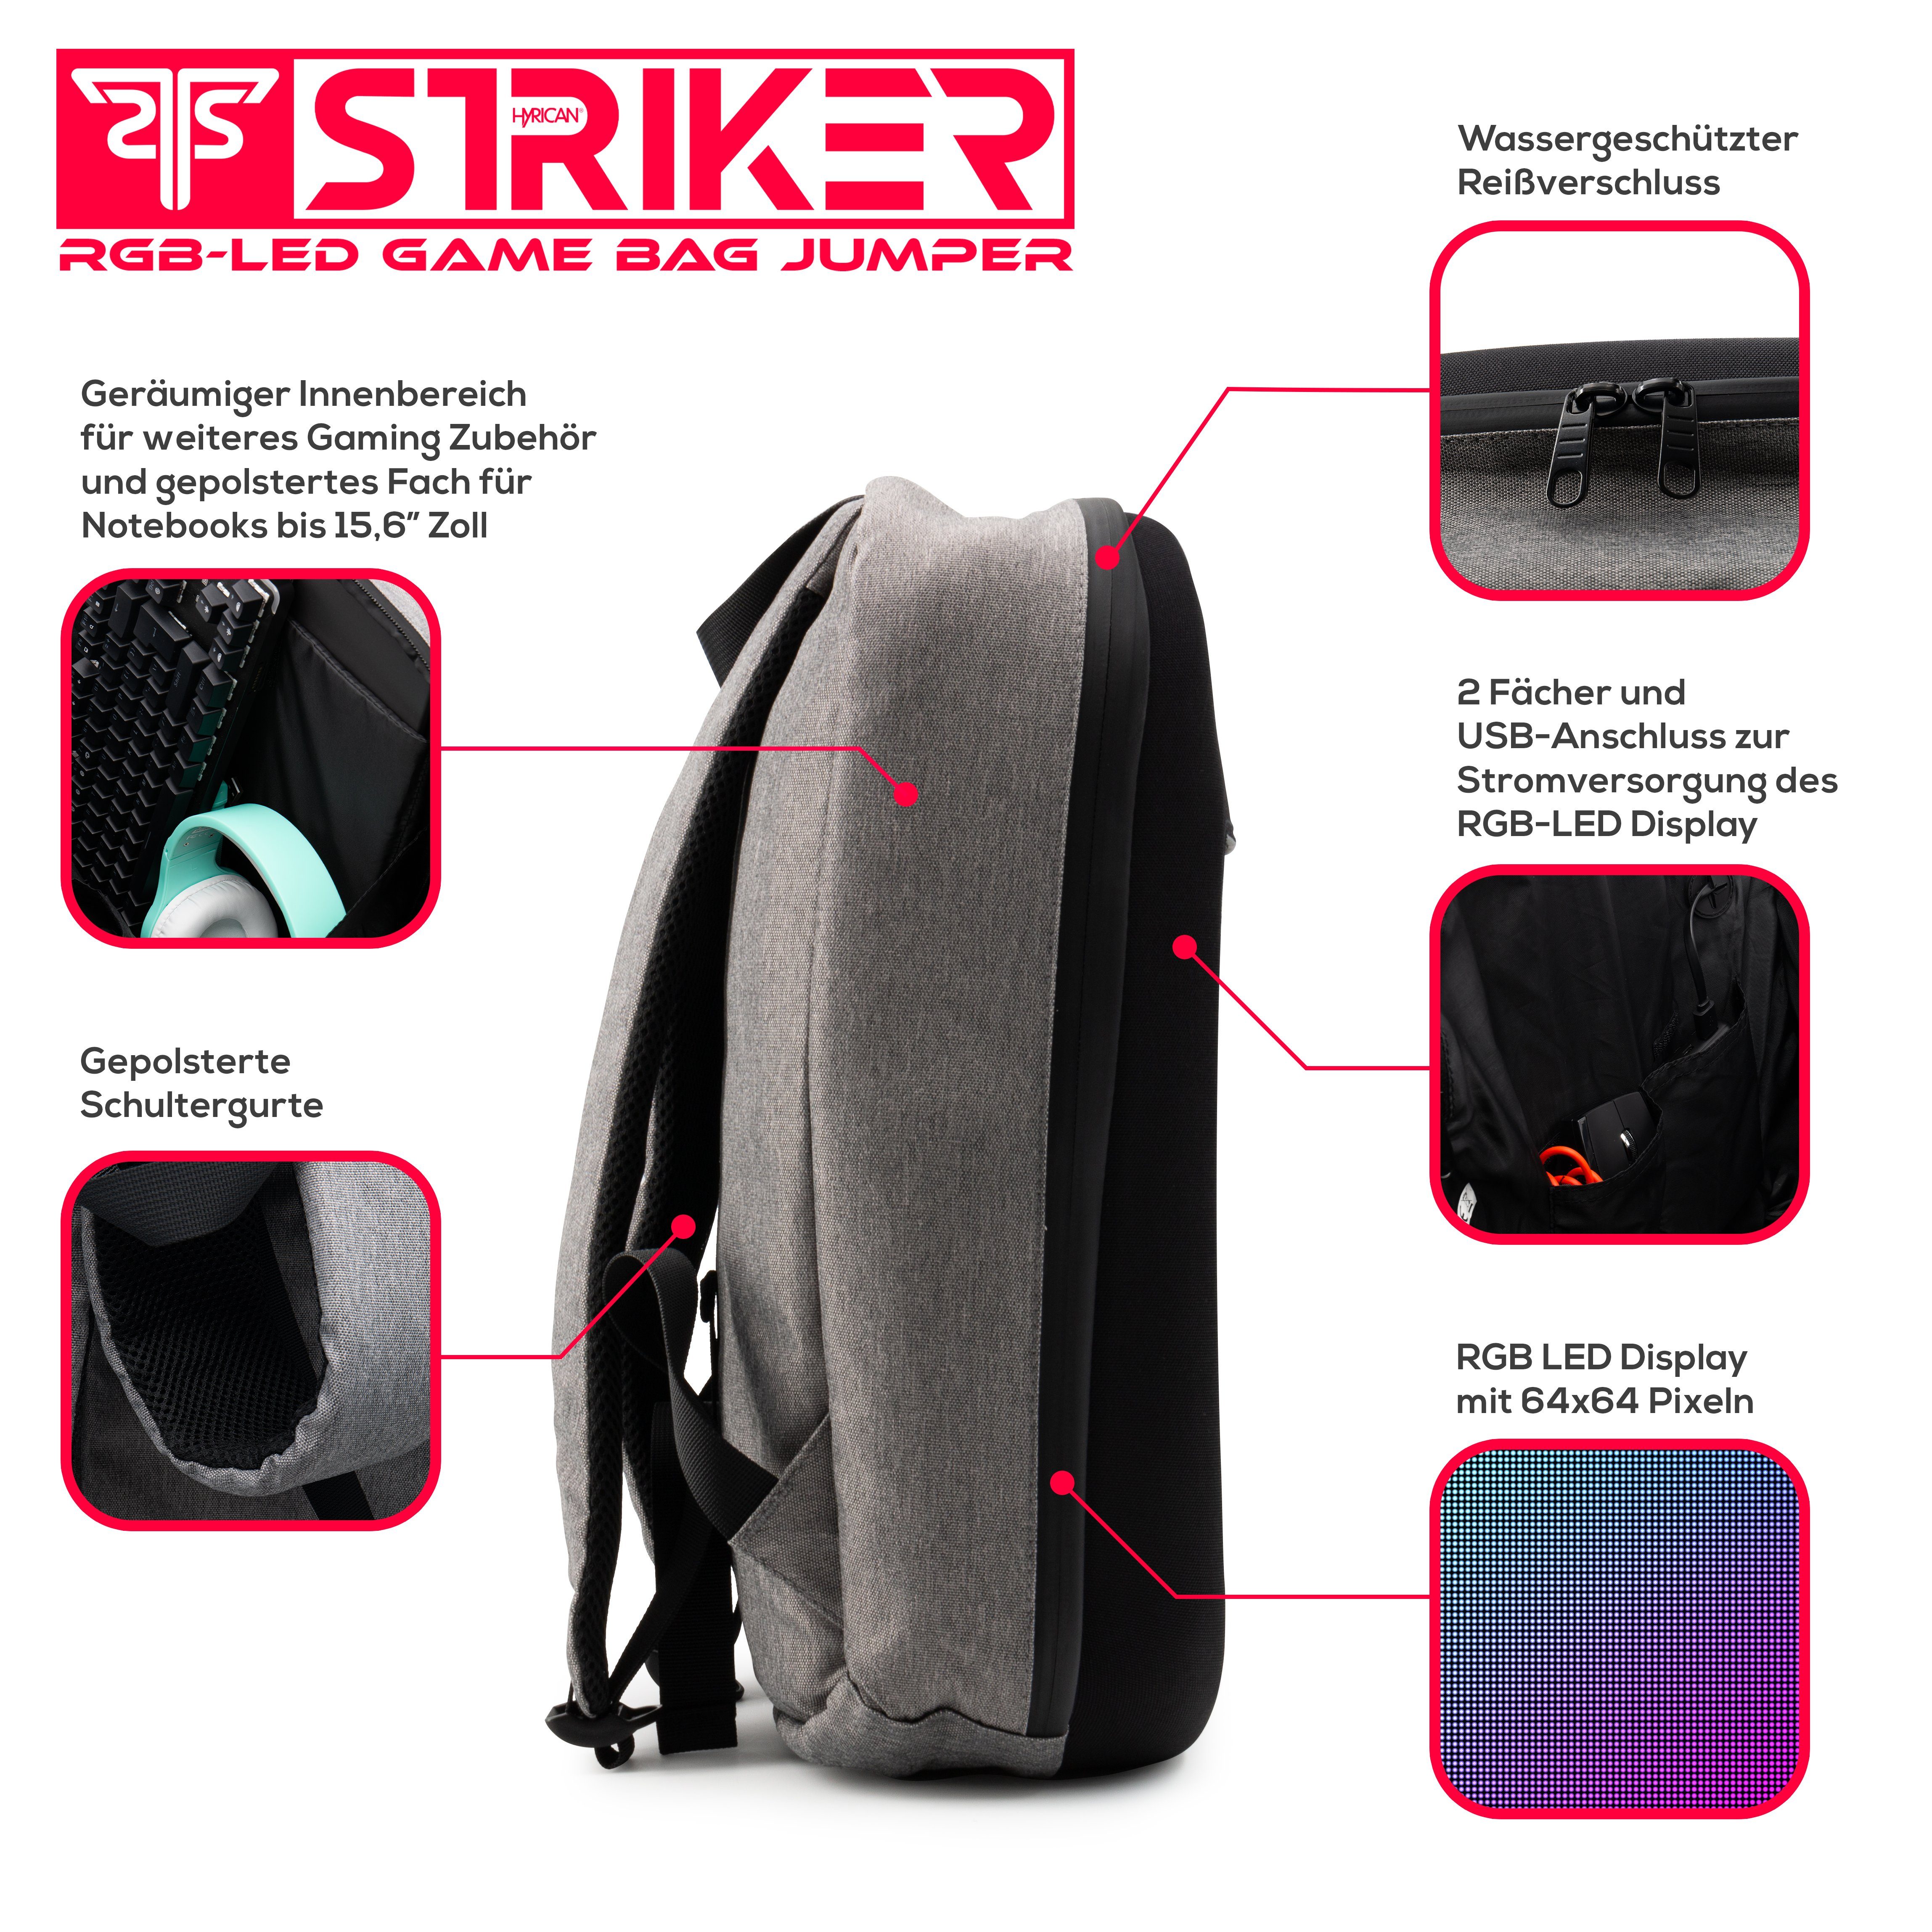 Hyrican Laptoprucksack Striker Game Gaming Bag JUMPER App Rucksack, gesteuerte RBG-LEDs